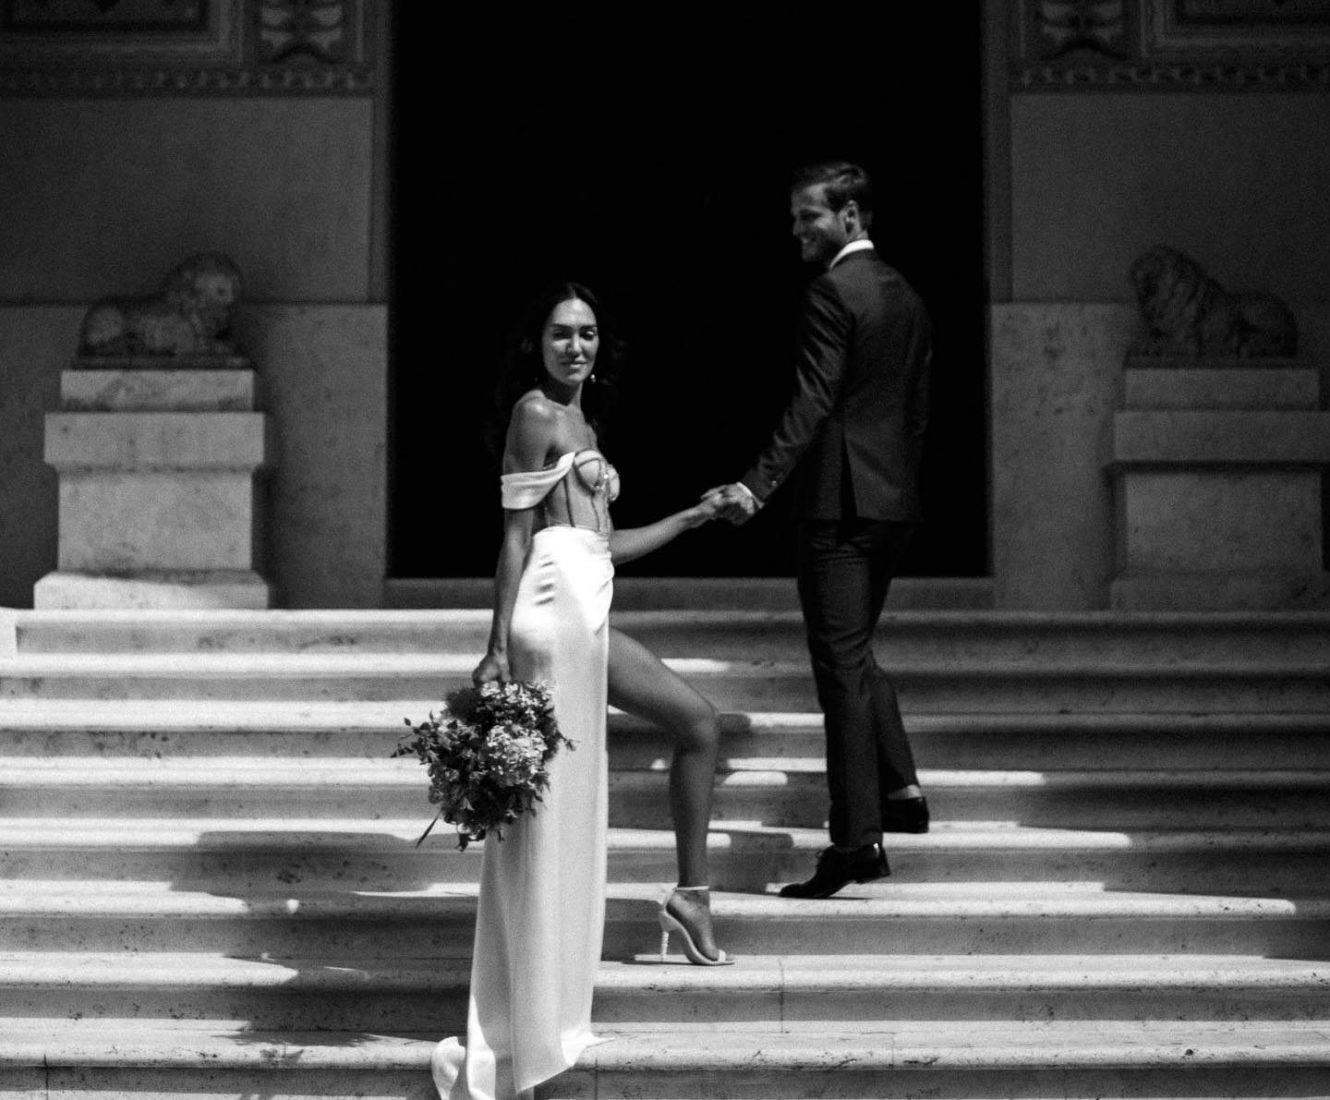 villa-clara-elopement-wedding-for-two-italy-rome-italian-villa-p3kuwb2oetiltf66kspl4fh2kav3w73lgux9jujsw0